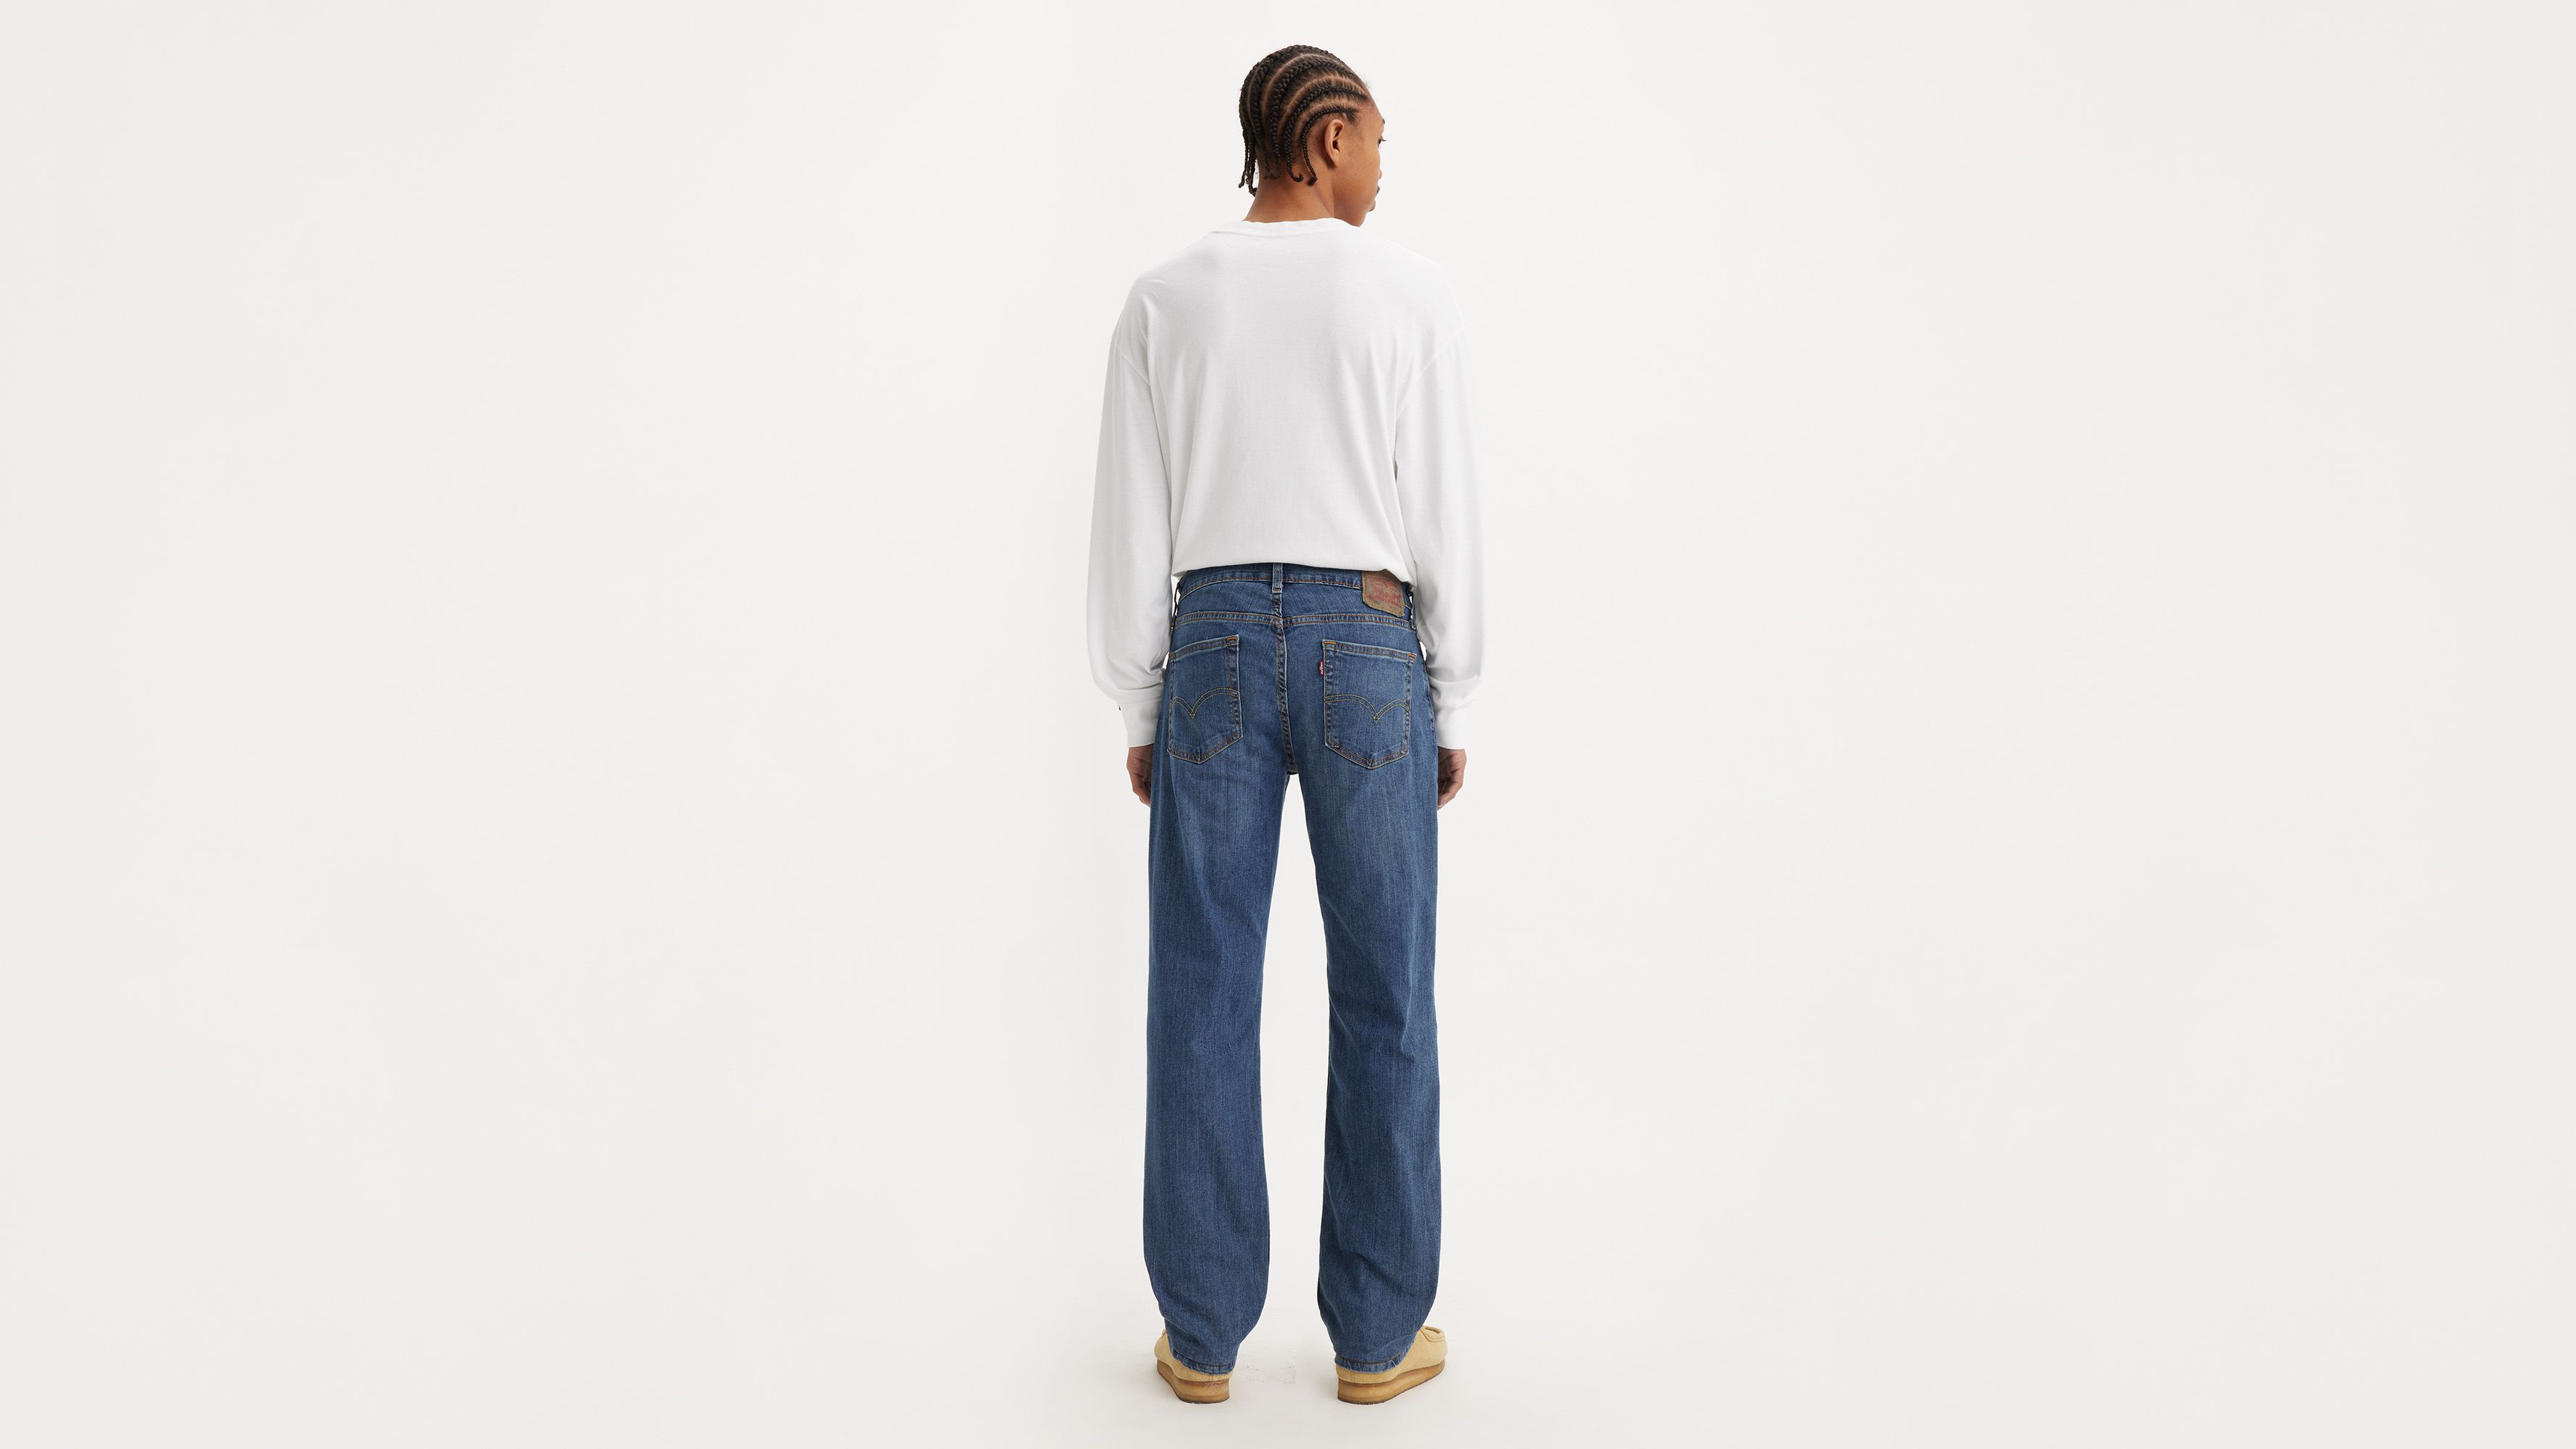 mens levis 559 stretch jeans